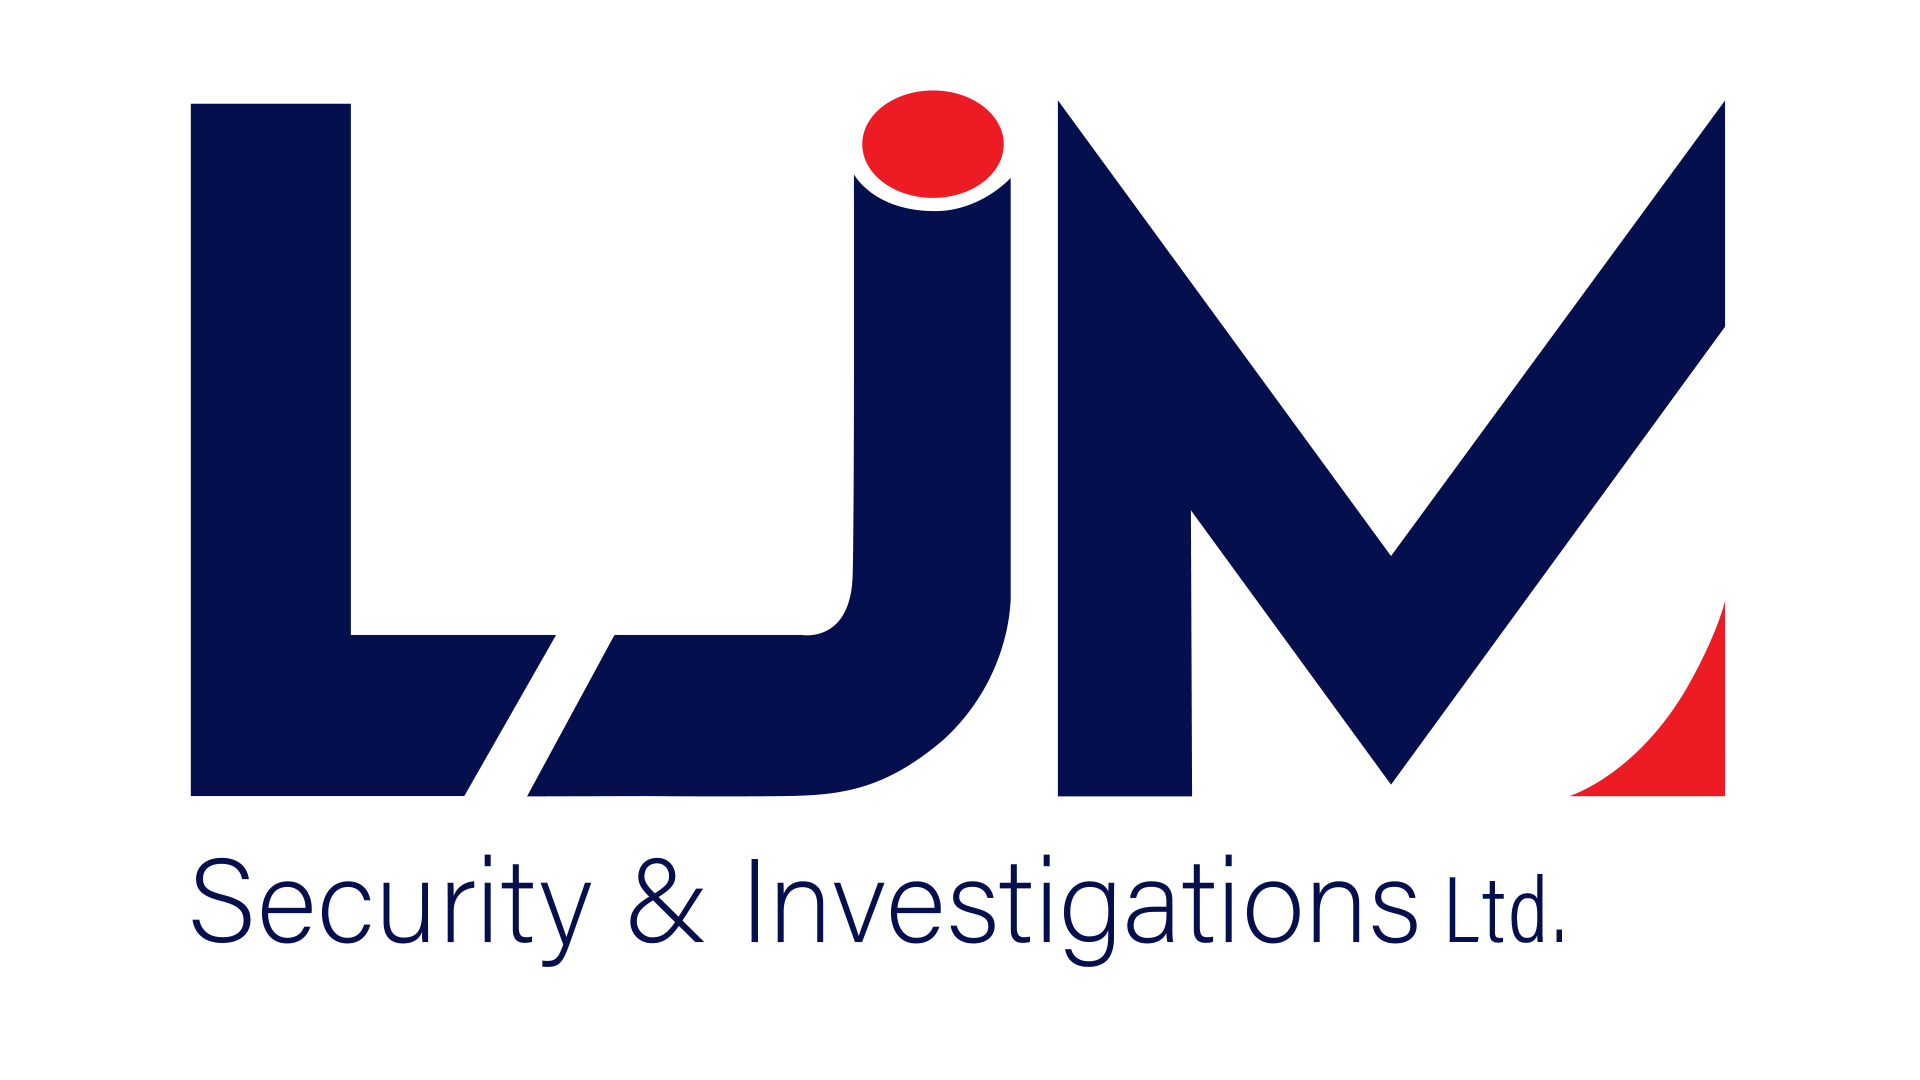 LJM Security & Investigations 